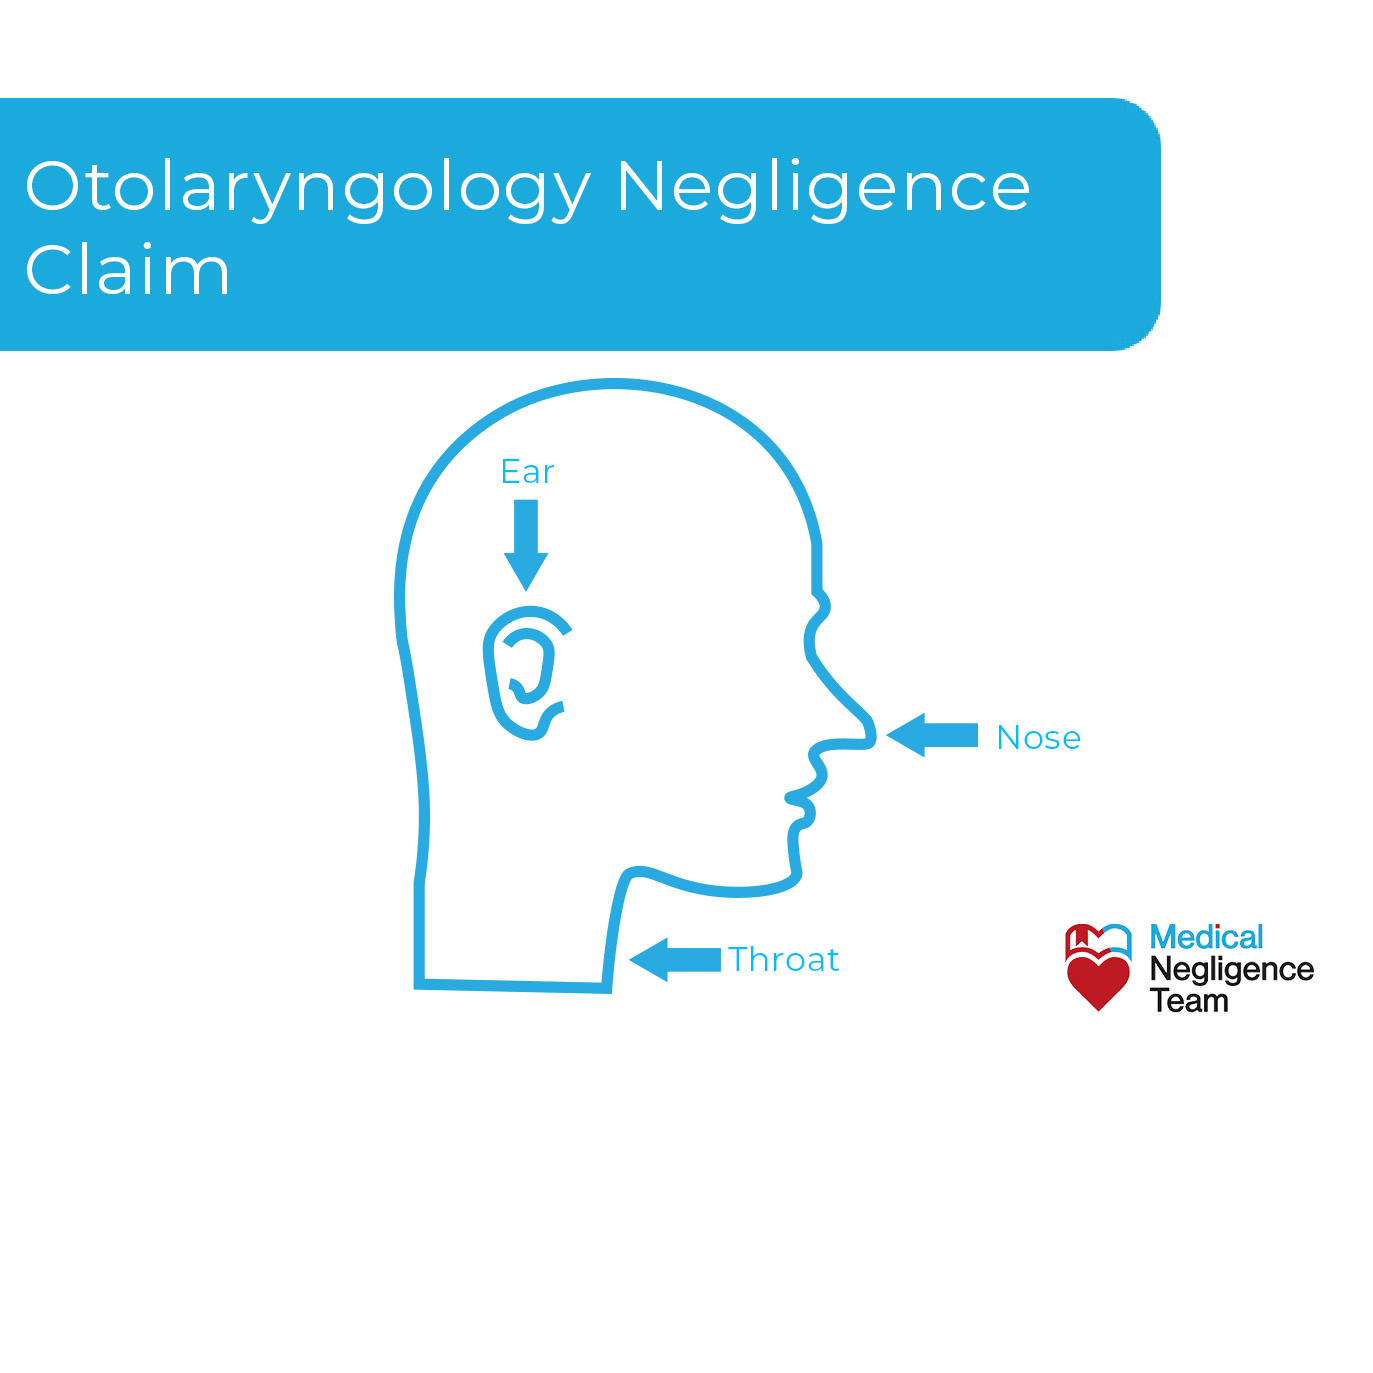 Otolaryngology Negligence Claim